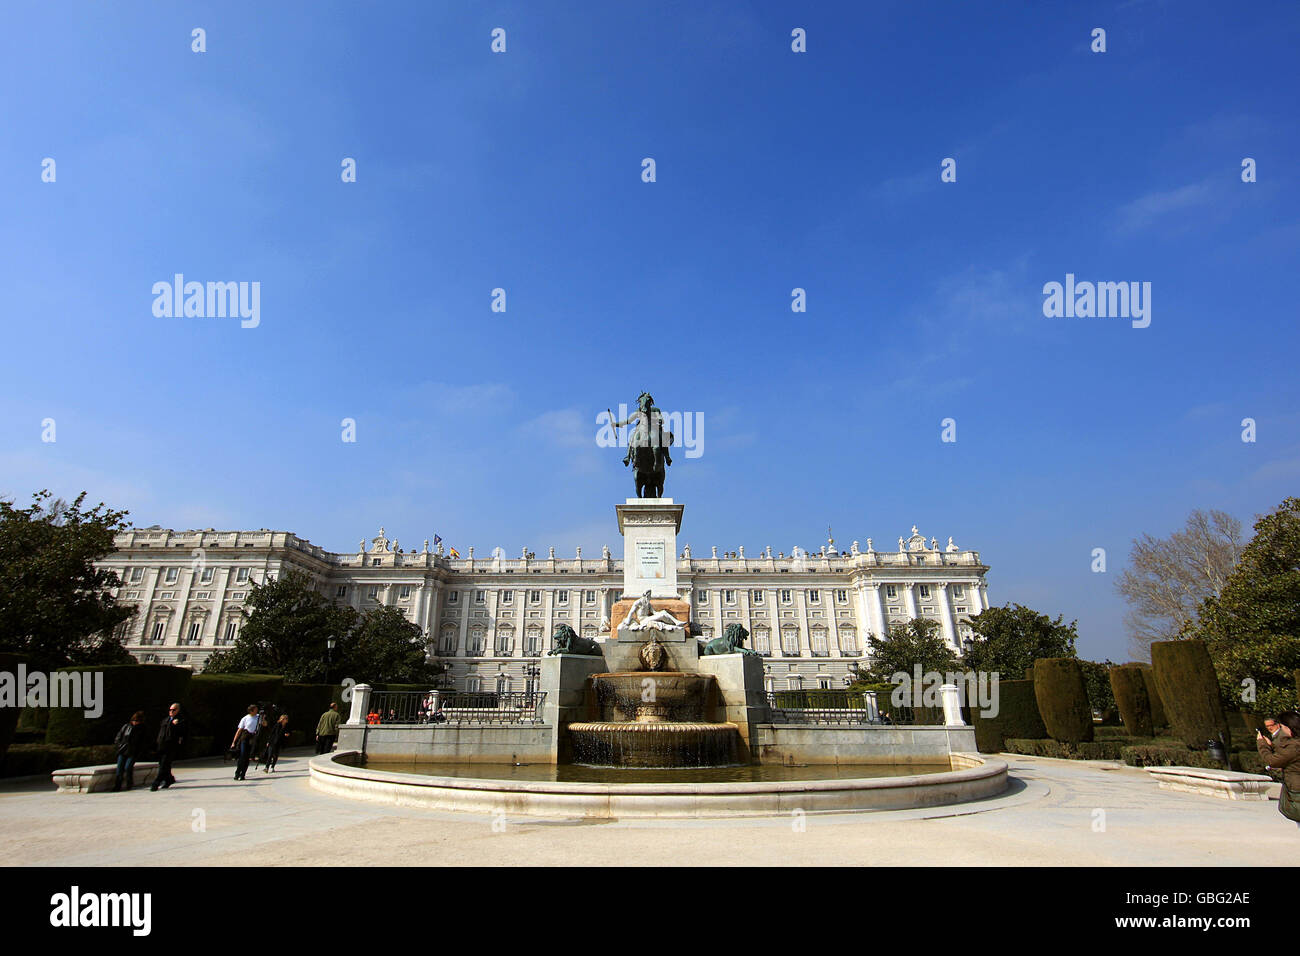 Travel stock - Madrid. Para Gloria de Las Artes monument in front of the Palacio Real, Madrid Stock Photo